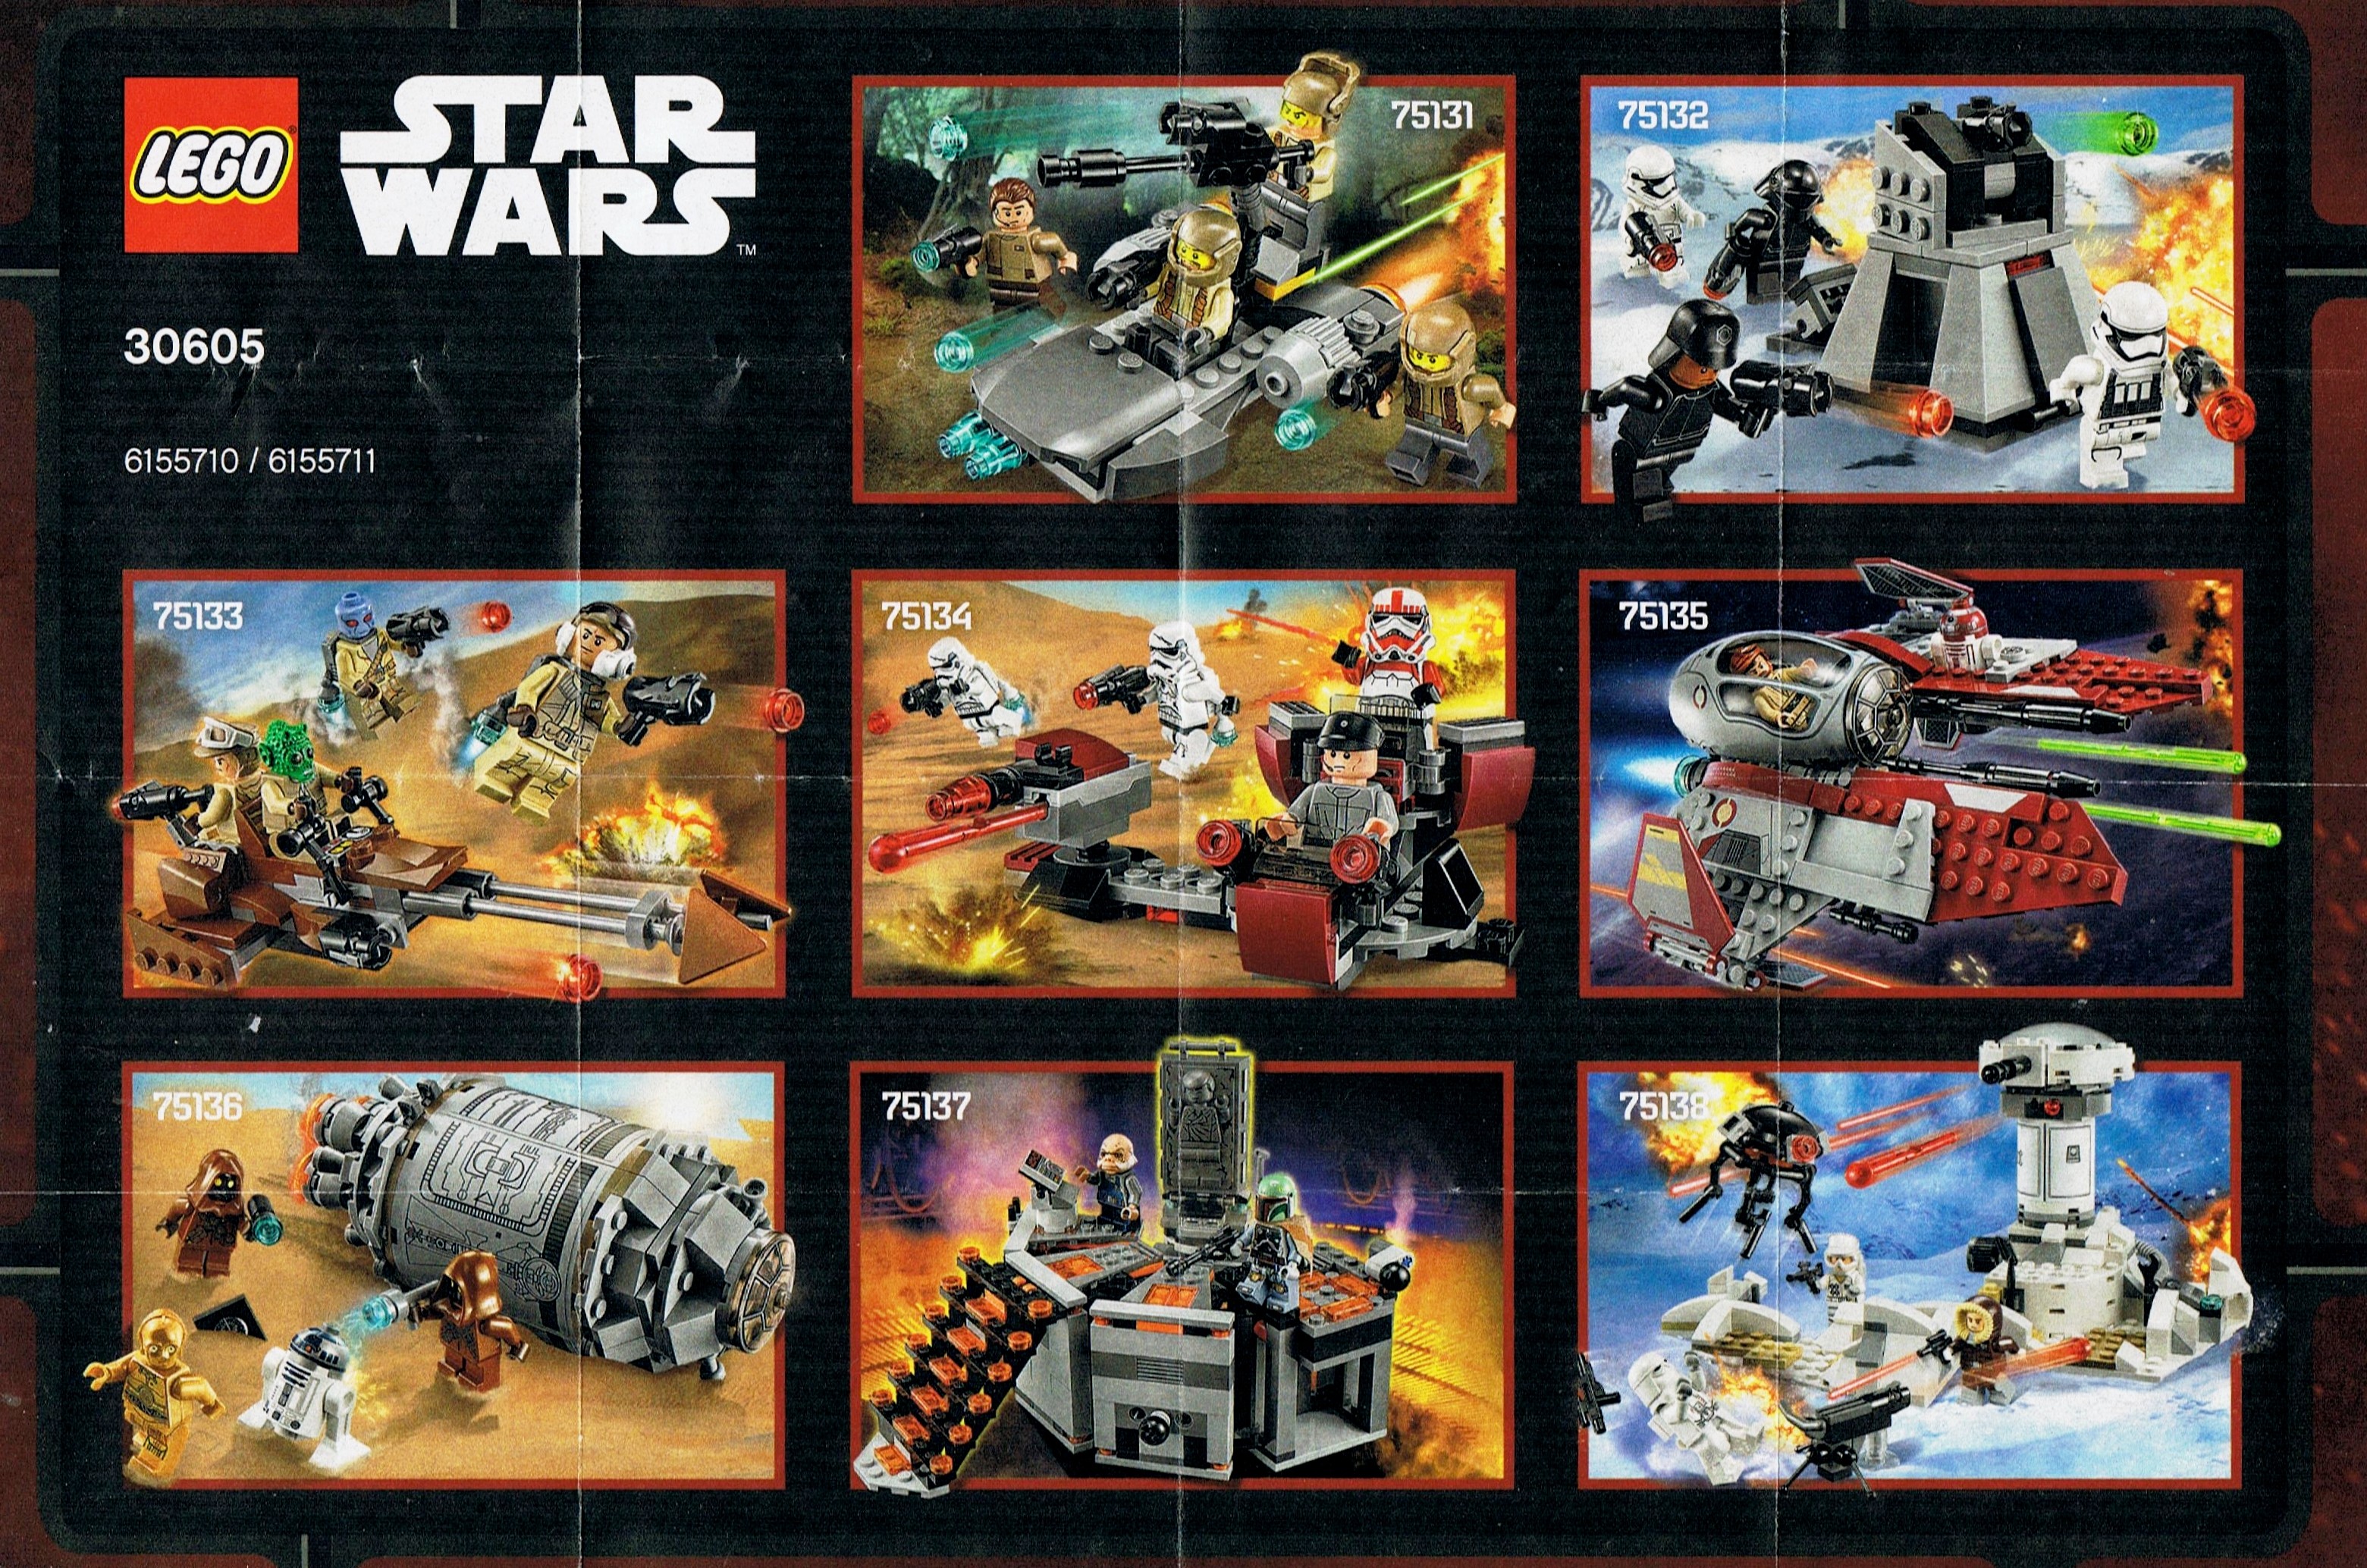 LEGO-Star-Wars-2016-Sets-Photos.jpg